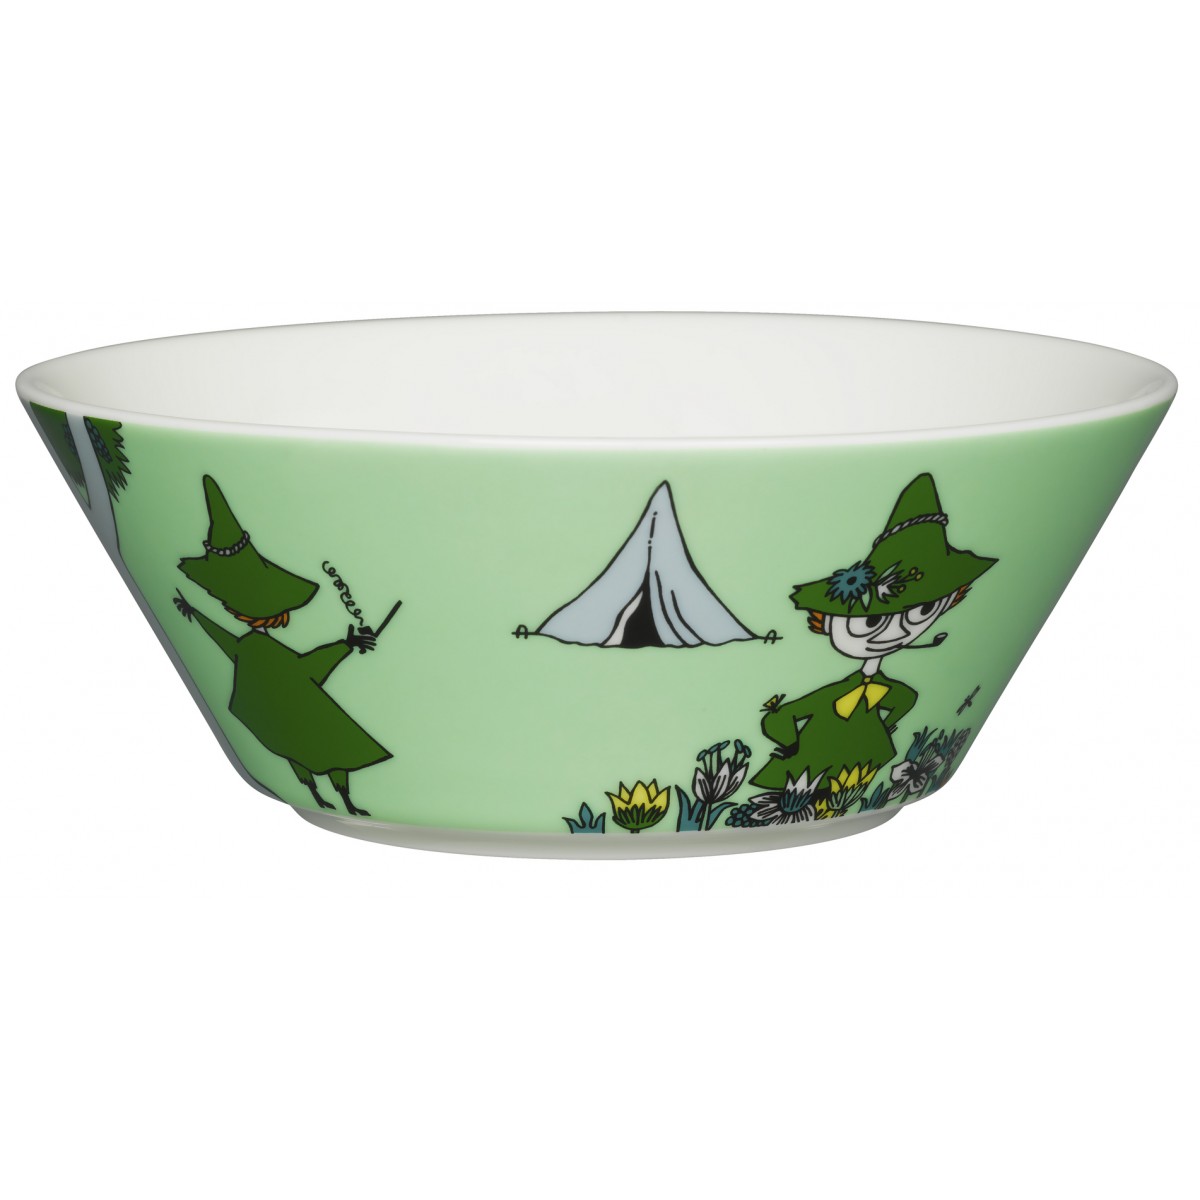 Snufkin green - Moomin bowl